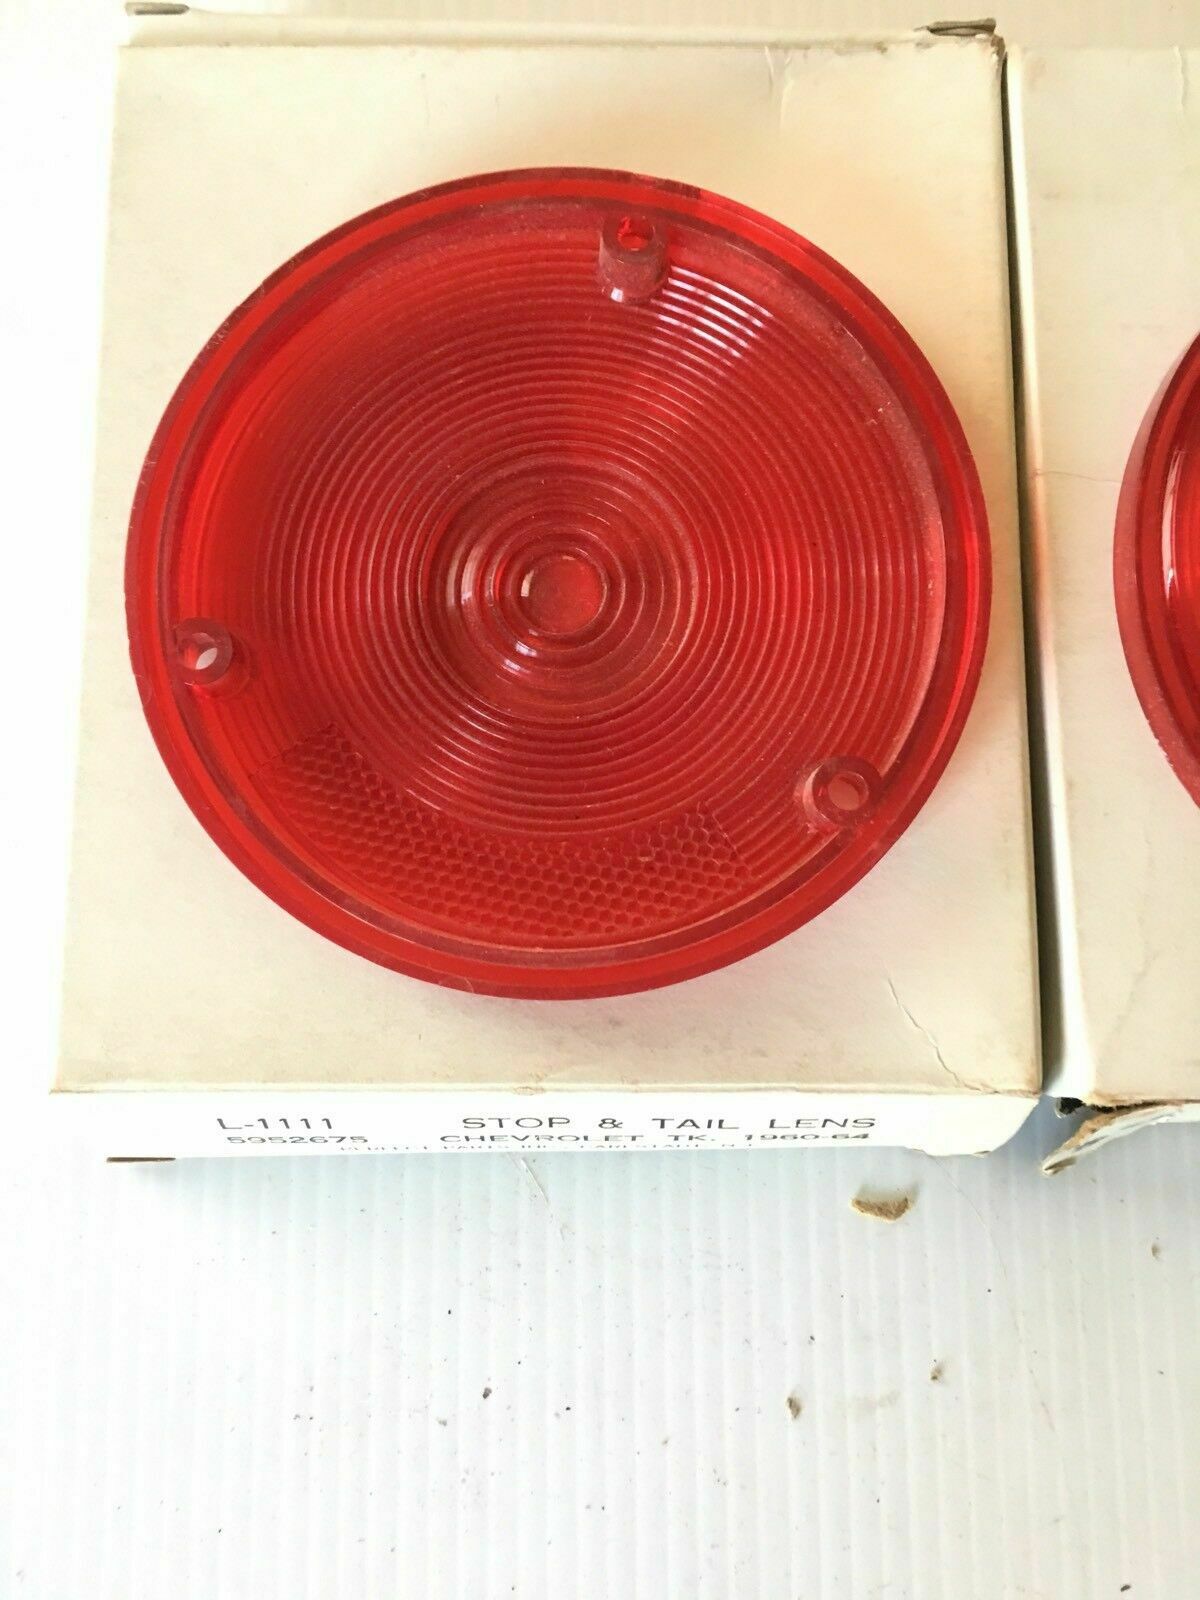 Tail Light Assemblies: GM CHEVY NORS 5952675 Tail Light Lens L-1111 1960-1964 Truck Pair (2) 5 Inch